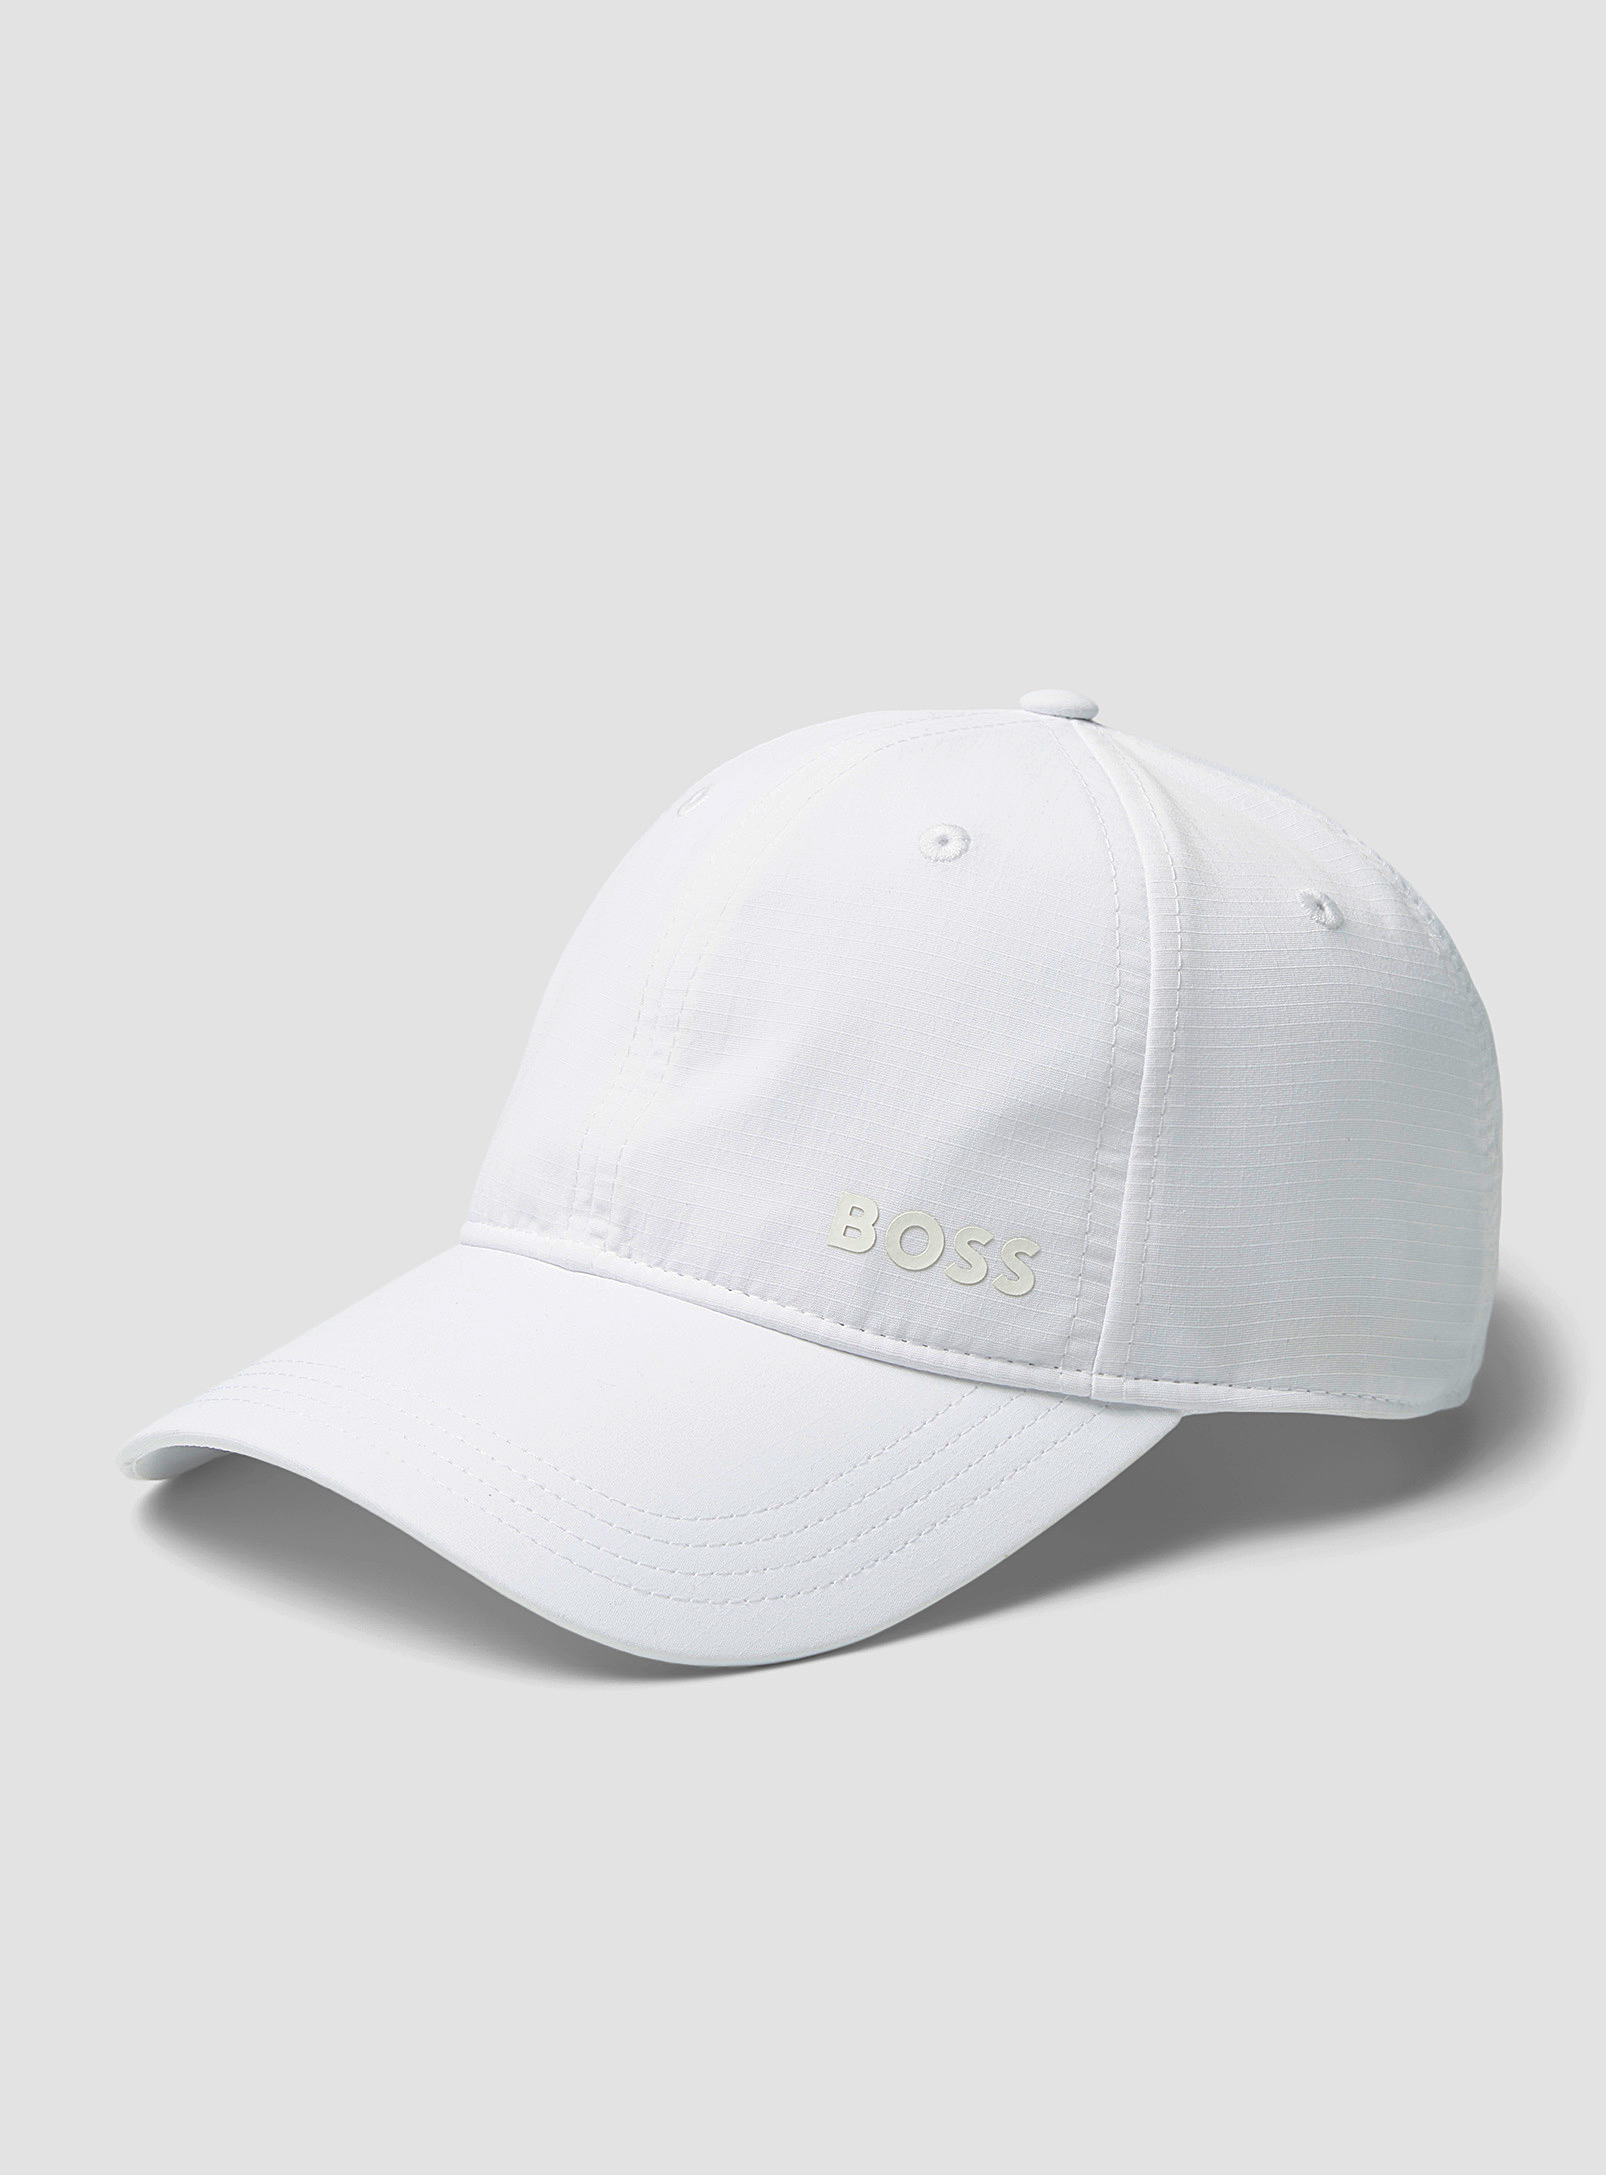 BOSS - La casquette souple monochrome